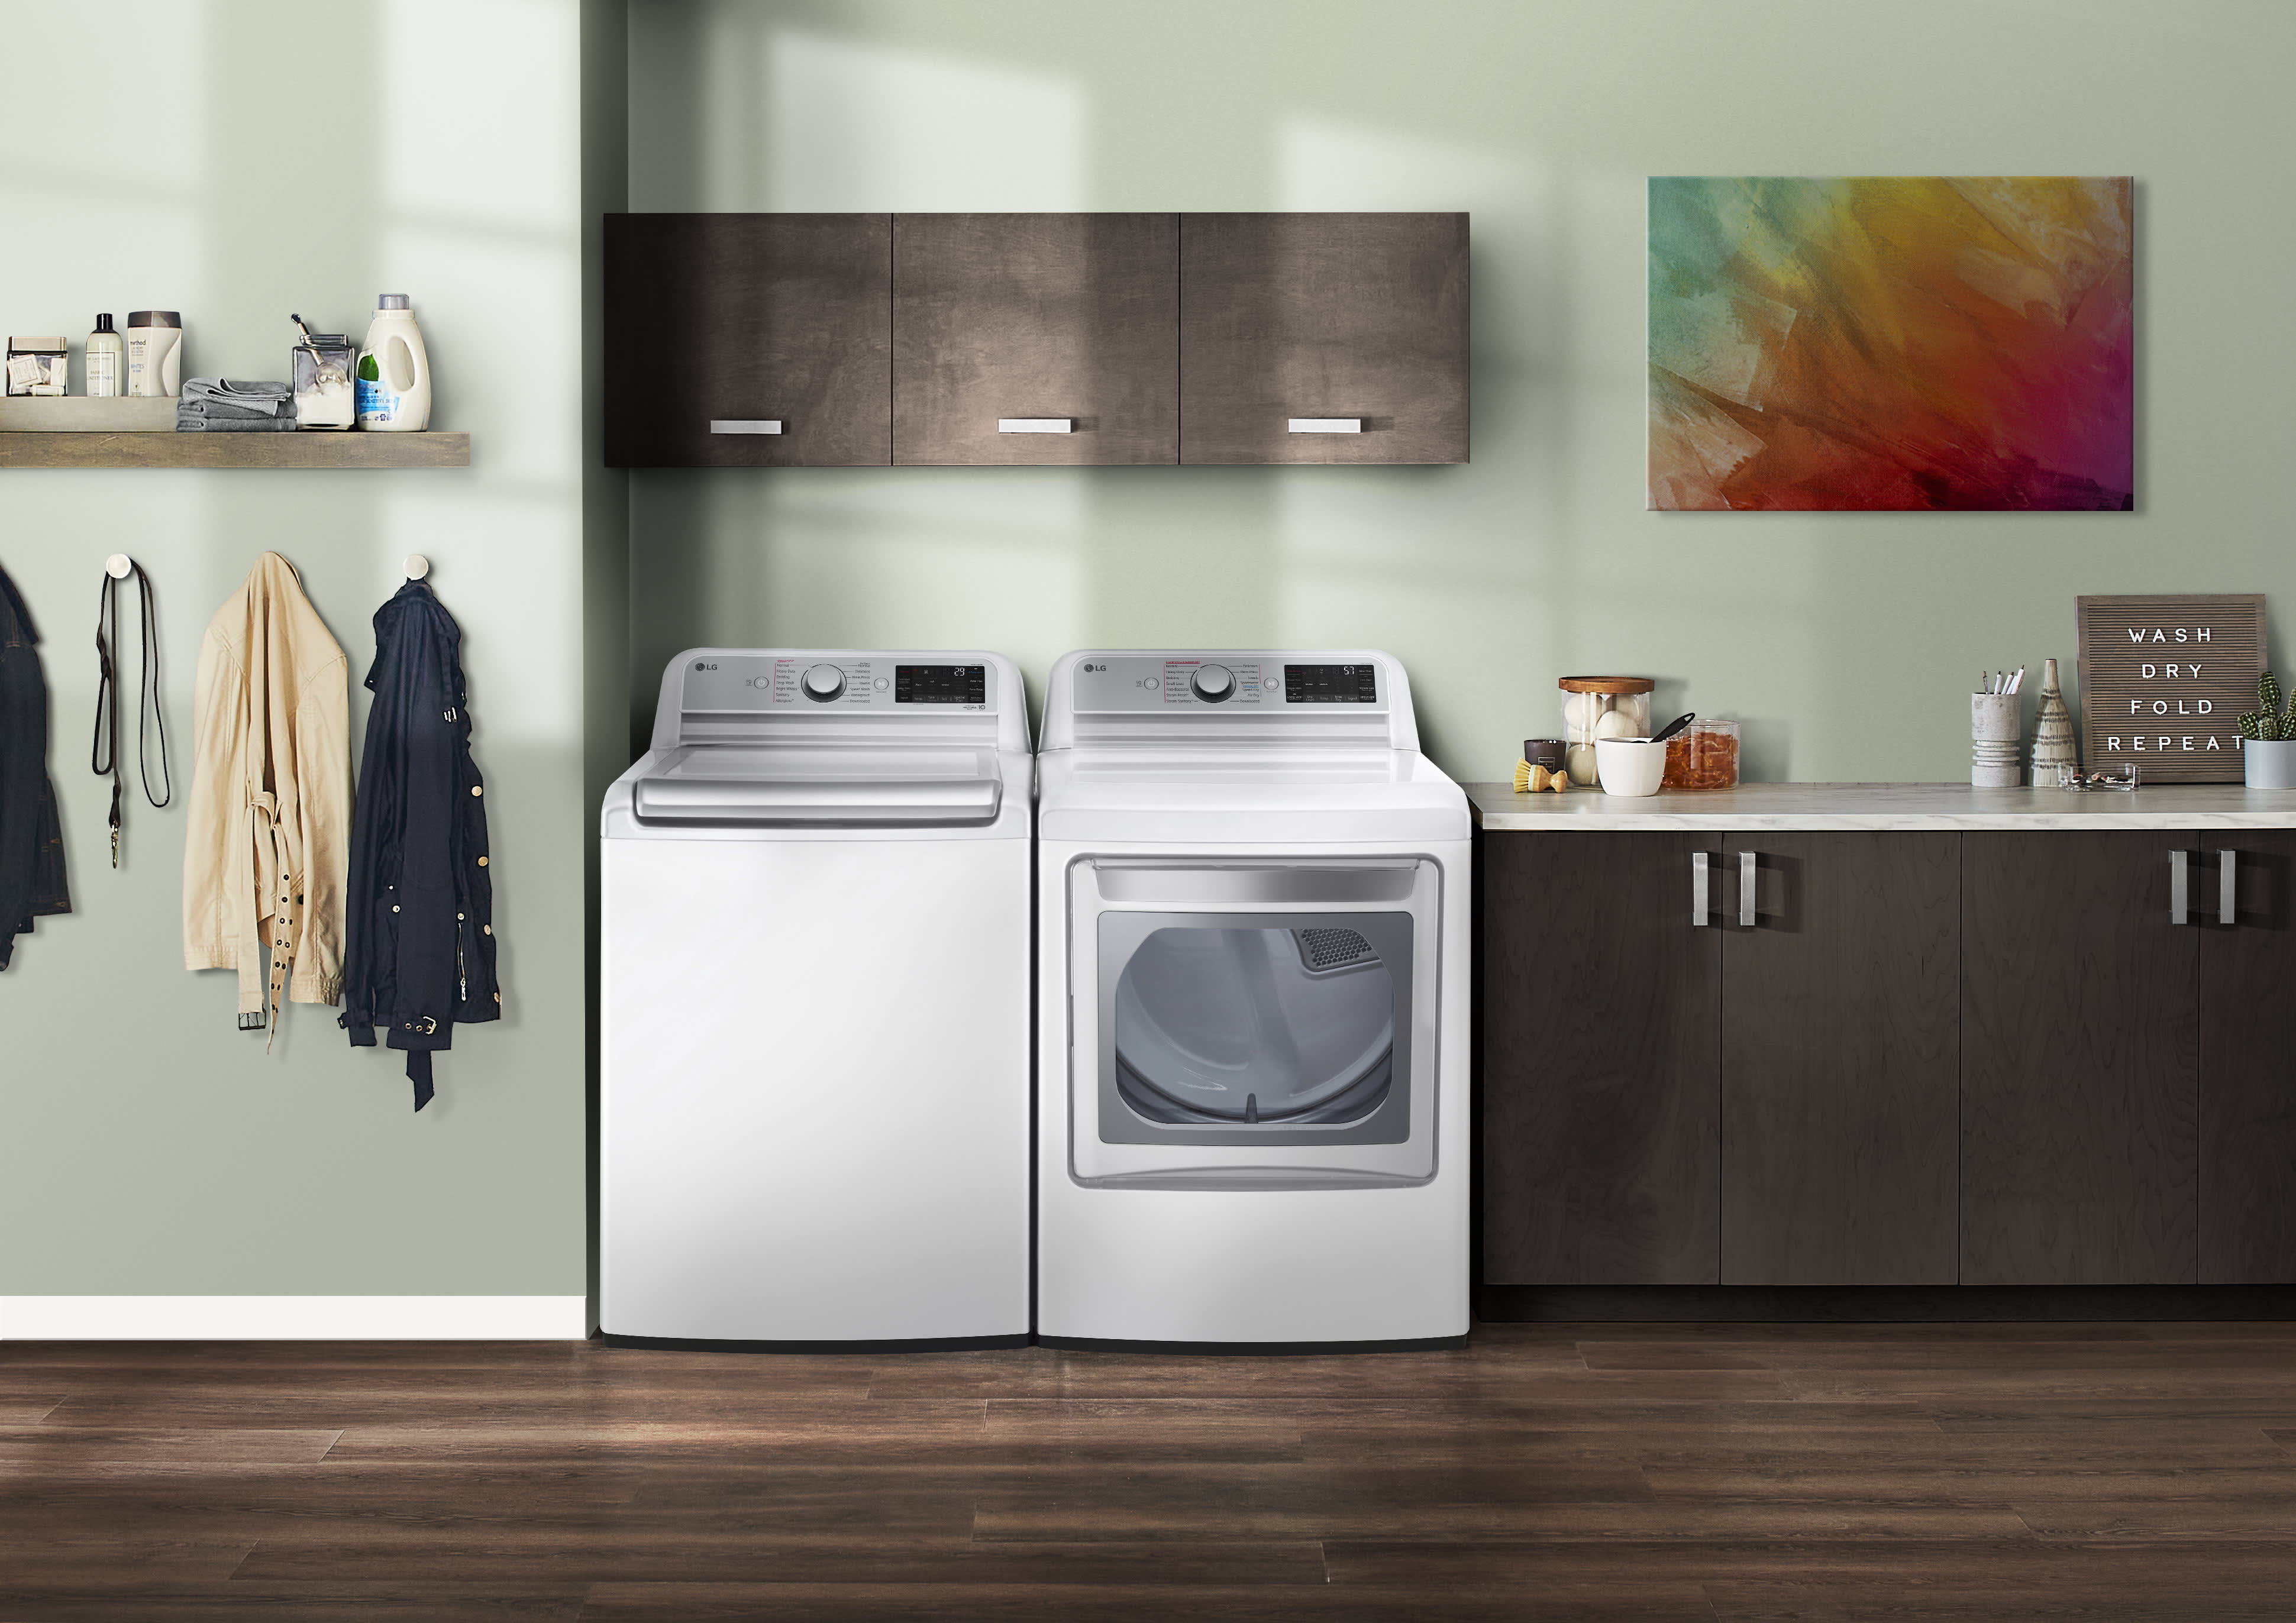 LG Washer - Laundry Tub Cleaning